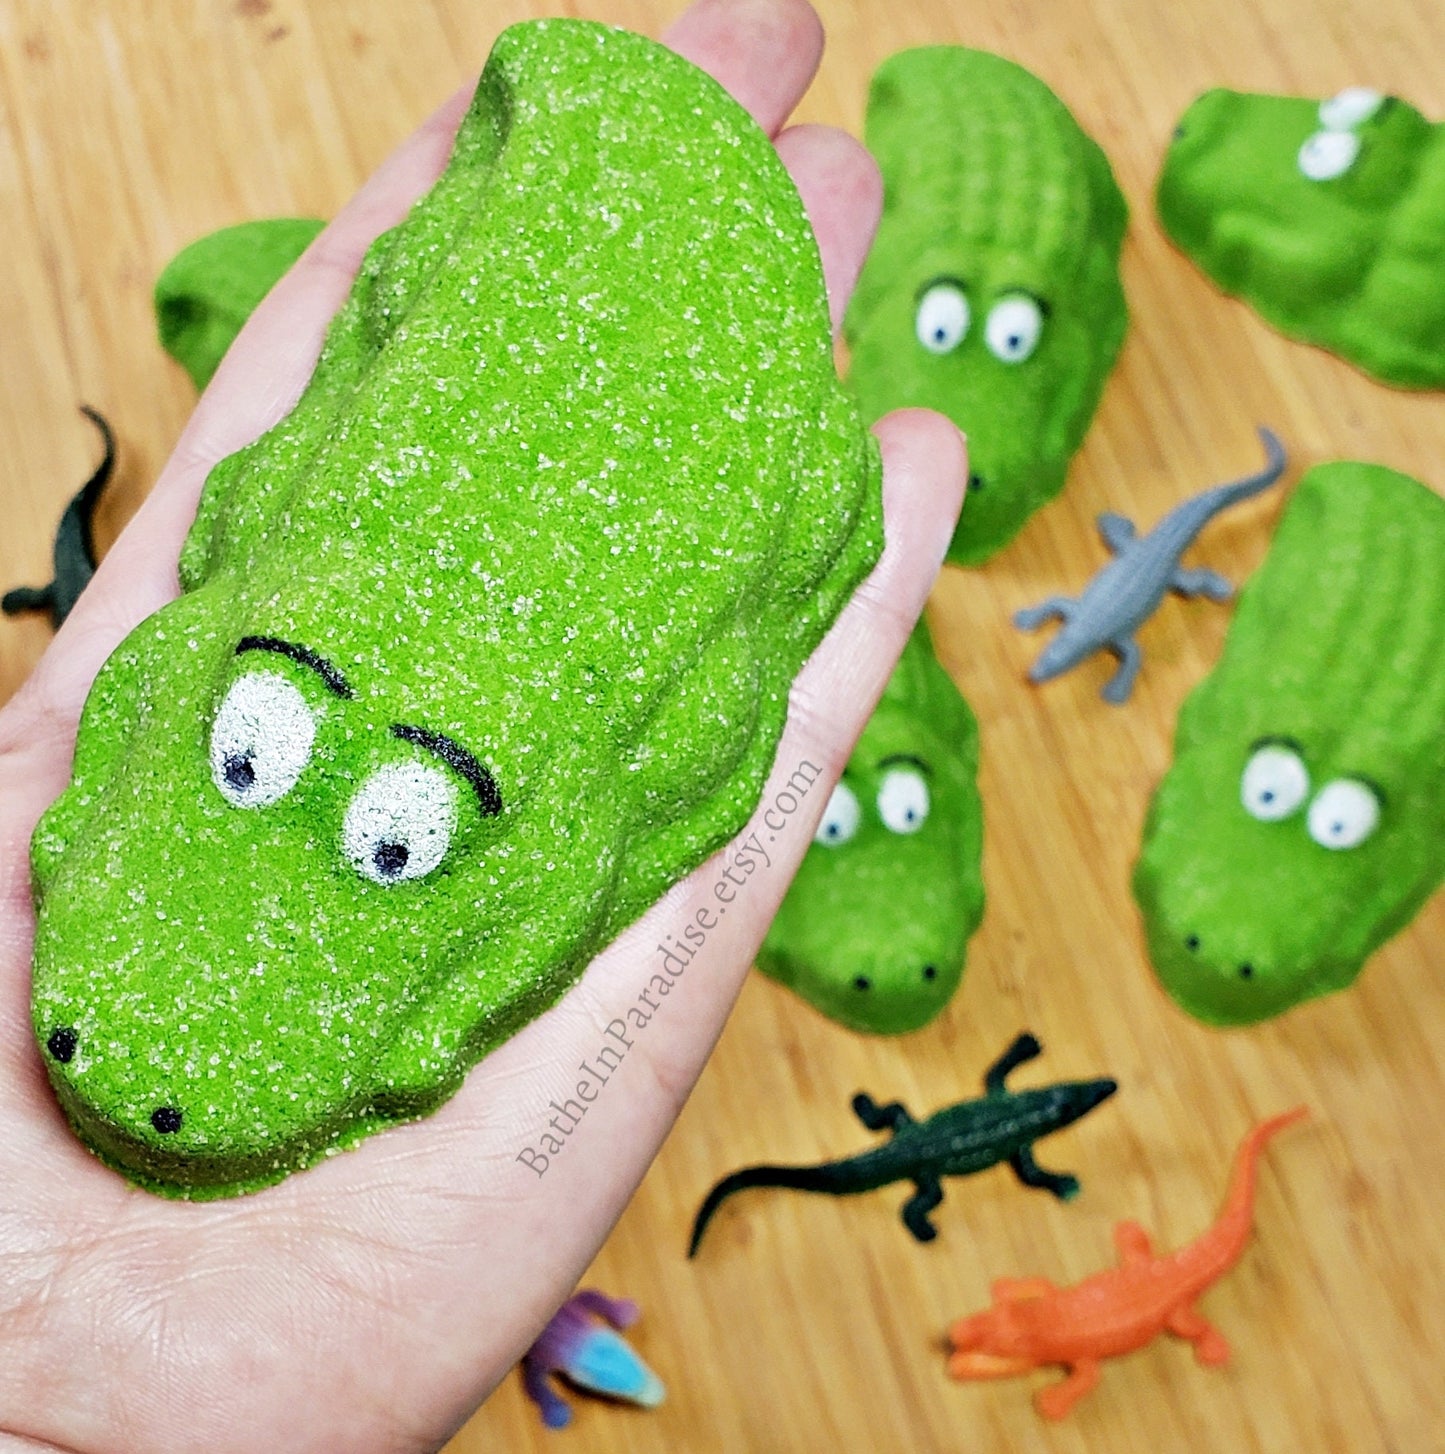 Gator Toy Bath Bomb (1) with Surprise Toy Inside | Crocodile Alligator | Bath Bombs for Kids Children